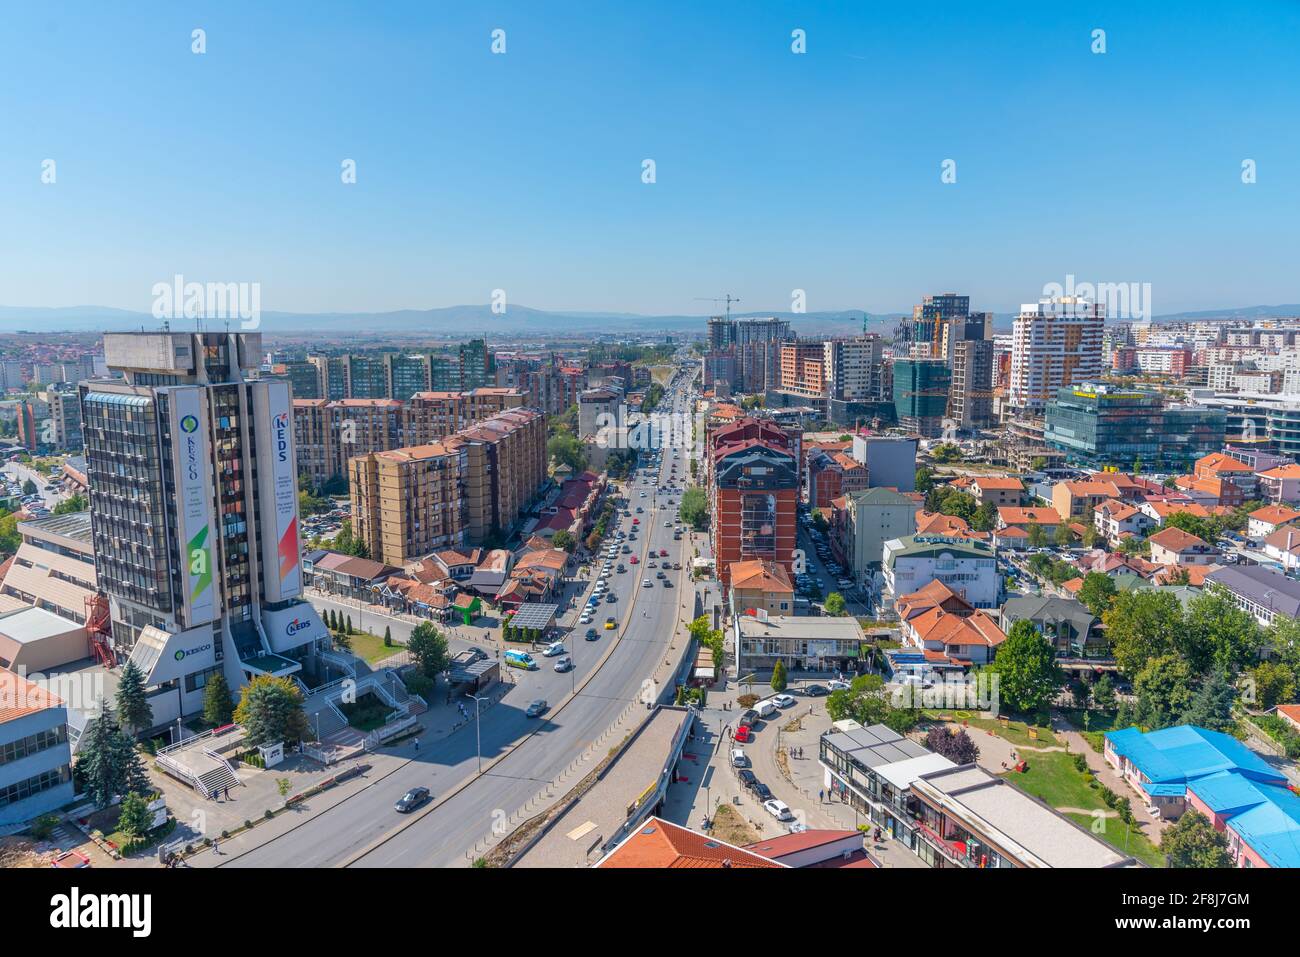 PRISHTINA, KOSOVO, 16. SEPTEMBER 2019: Luftaufnahme des Bill Clinton Boulevards in Prishtina, Kosovo Stockfoto